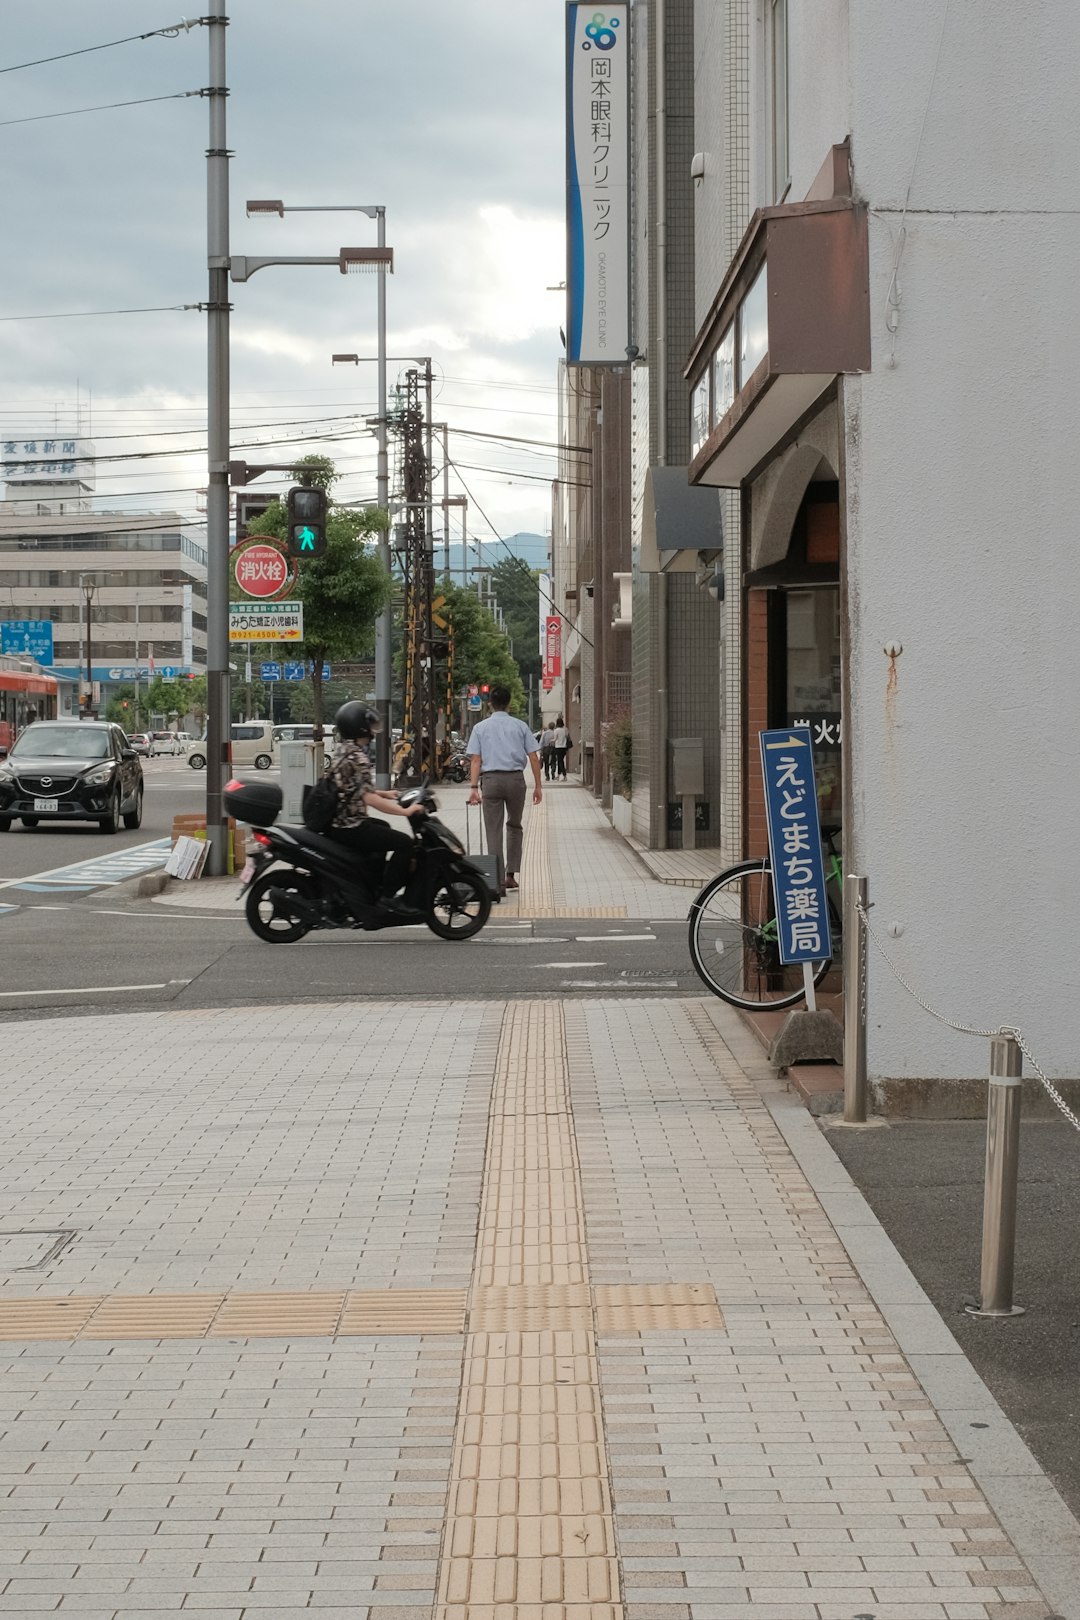 black motorcycle parked on sidewalk during daytime